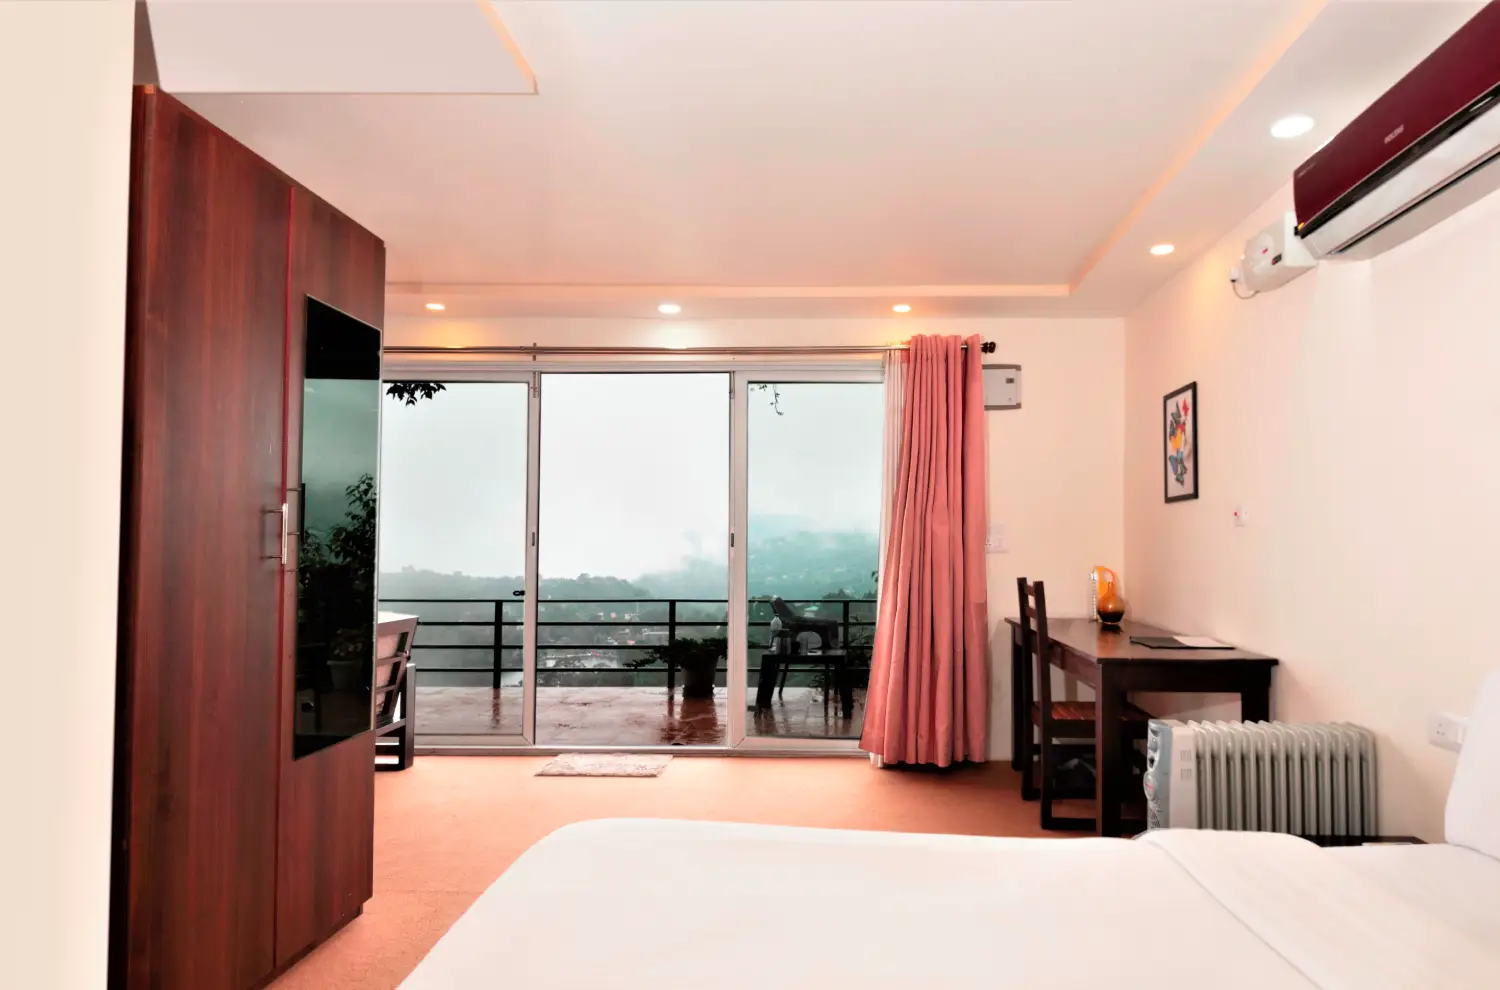 Uttarakhand hotel booking